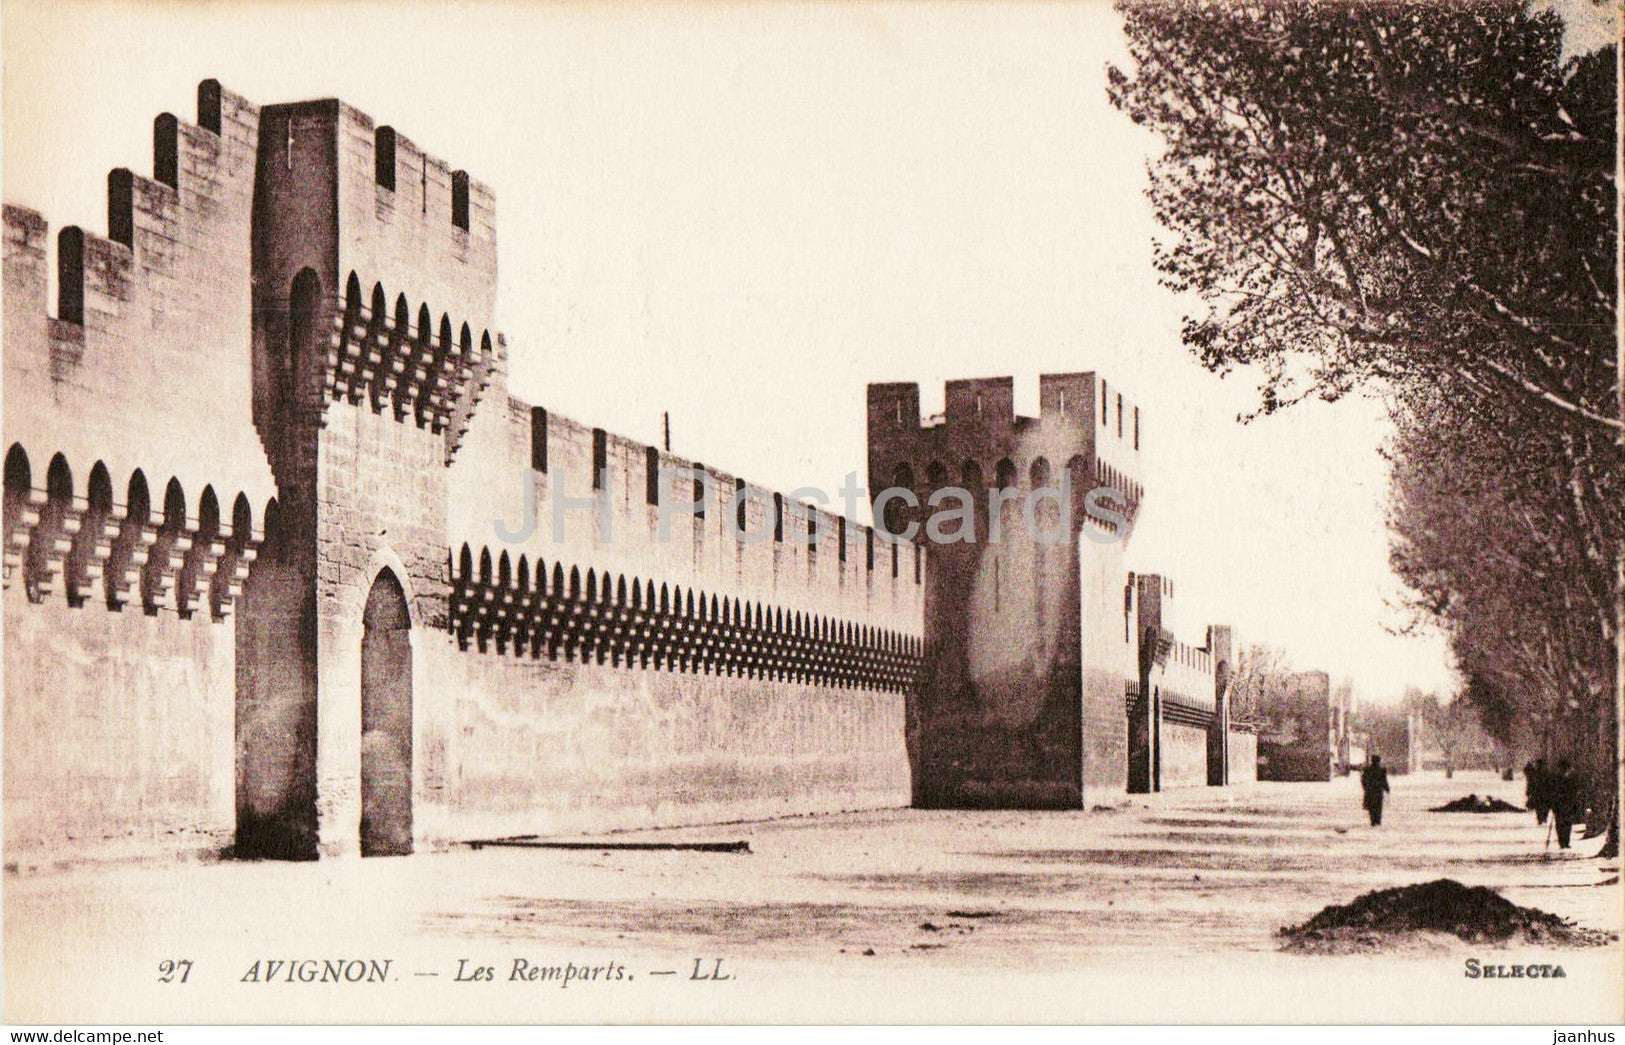 Avignon - Les Remparts - 27 - old postcard - France - unused - JH Postcards